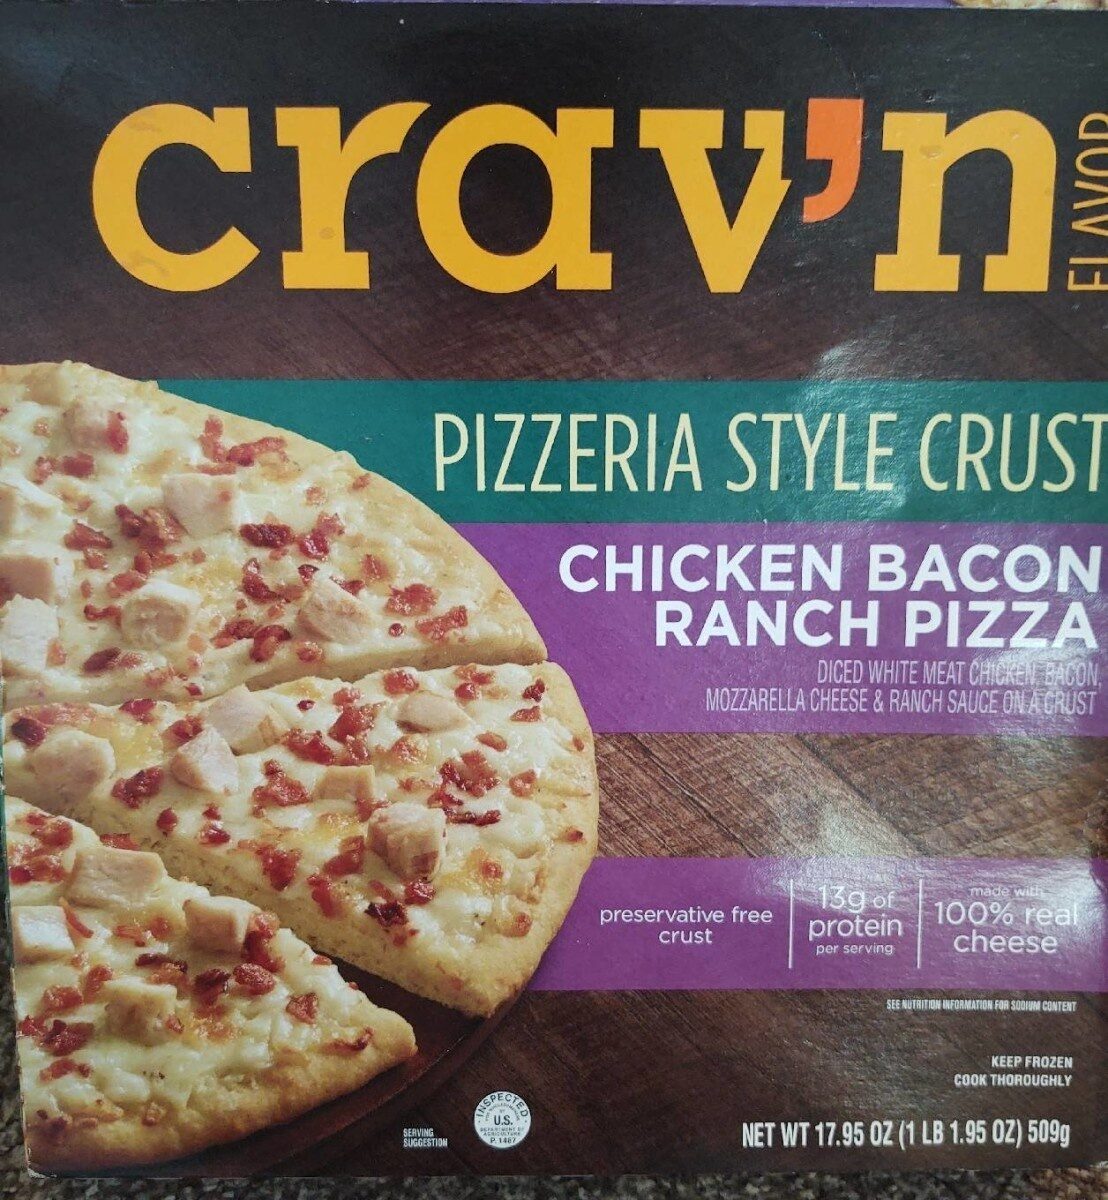 Crav'n flavor pizzeria style crust chicken bacon ranch pizza - Product - en